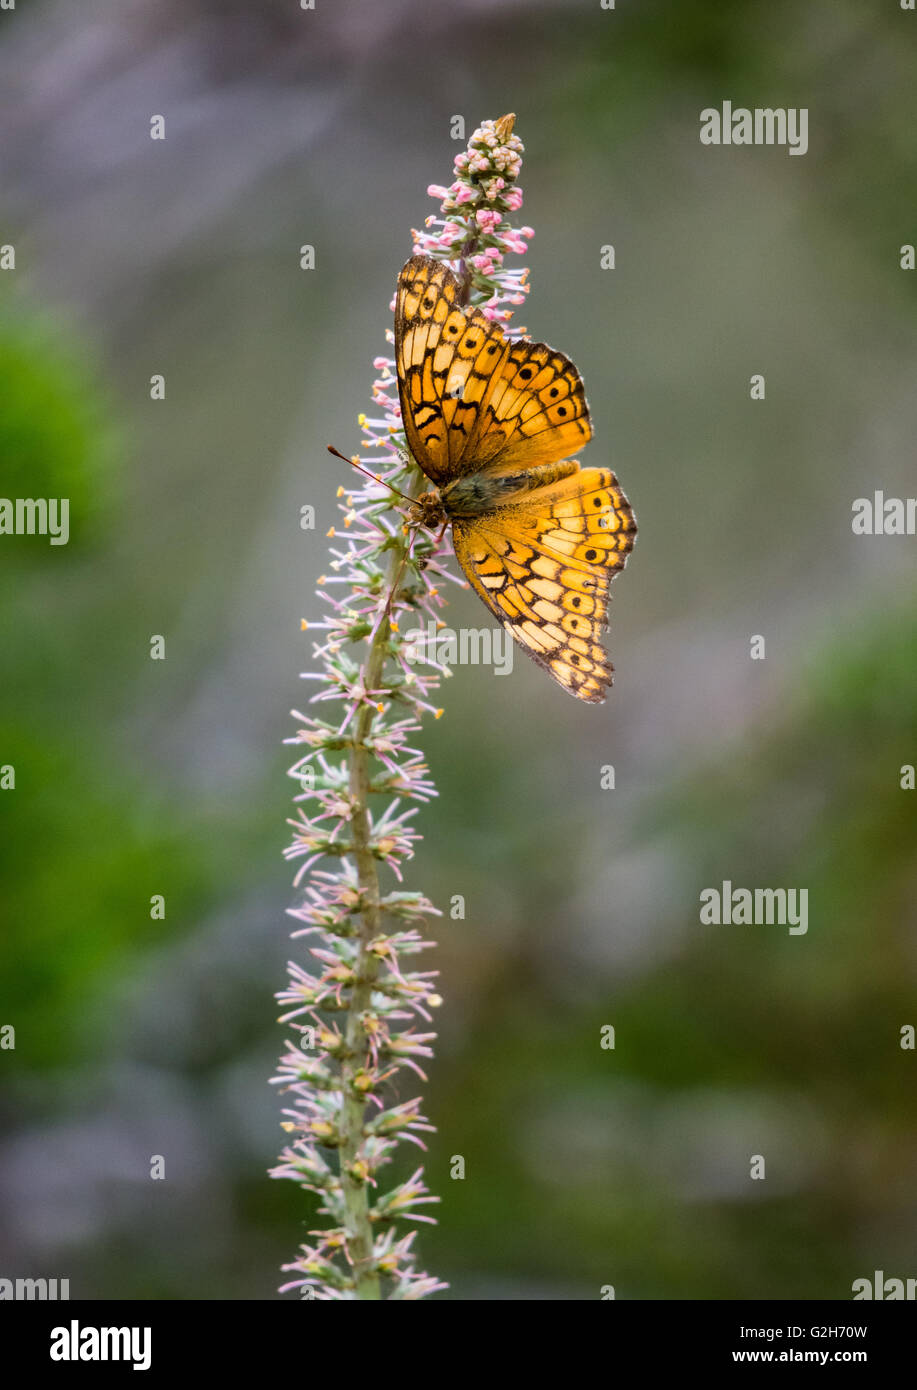 A Variegated Fritillary butterfly (Euptoieta claudia) feeding on wild flower. Texas Hill Country, USA. Stock Photo